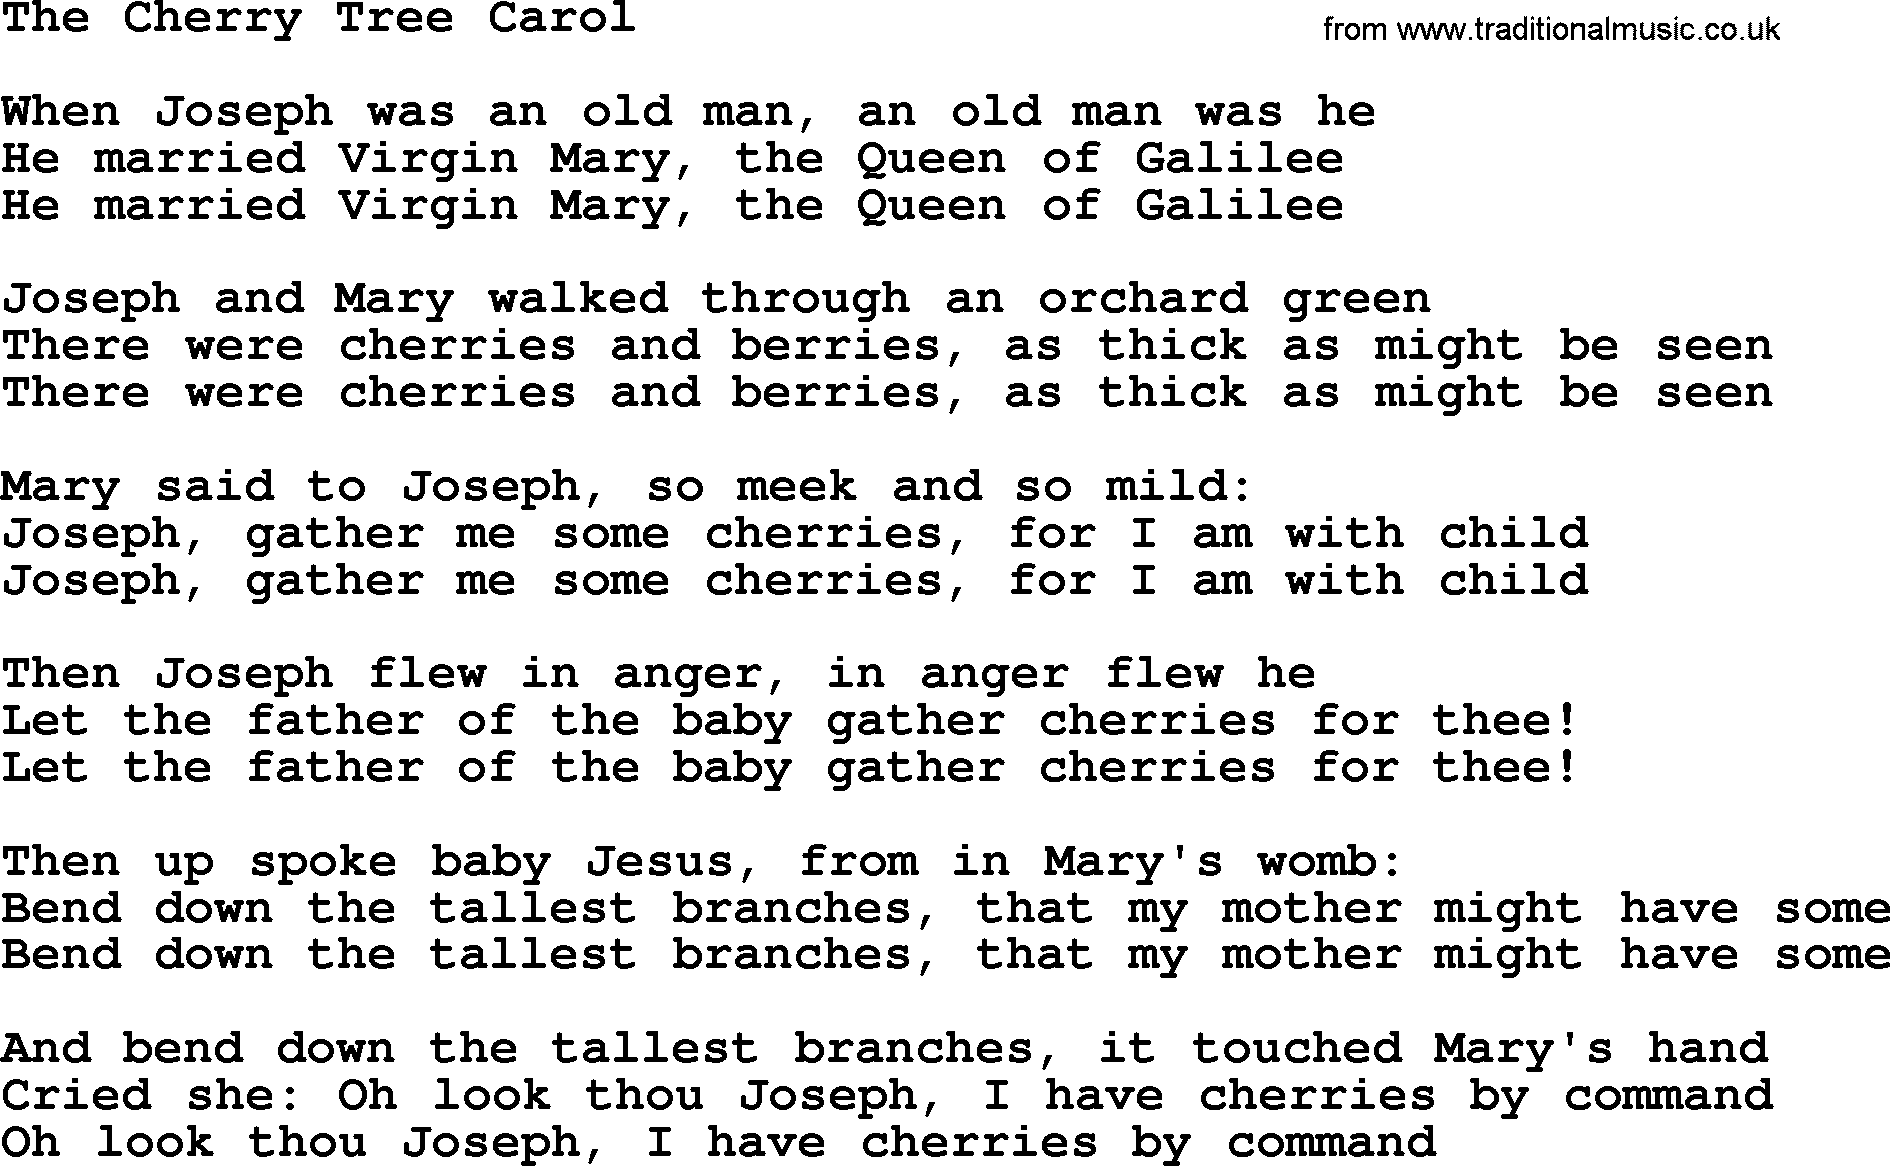 Joan Baez song The Cherry Tree Carol, lyrics